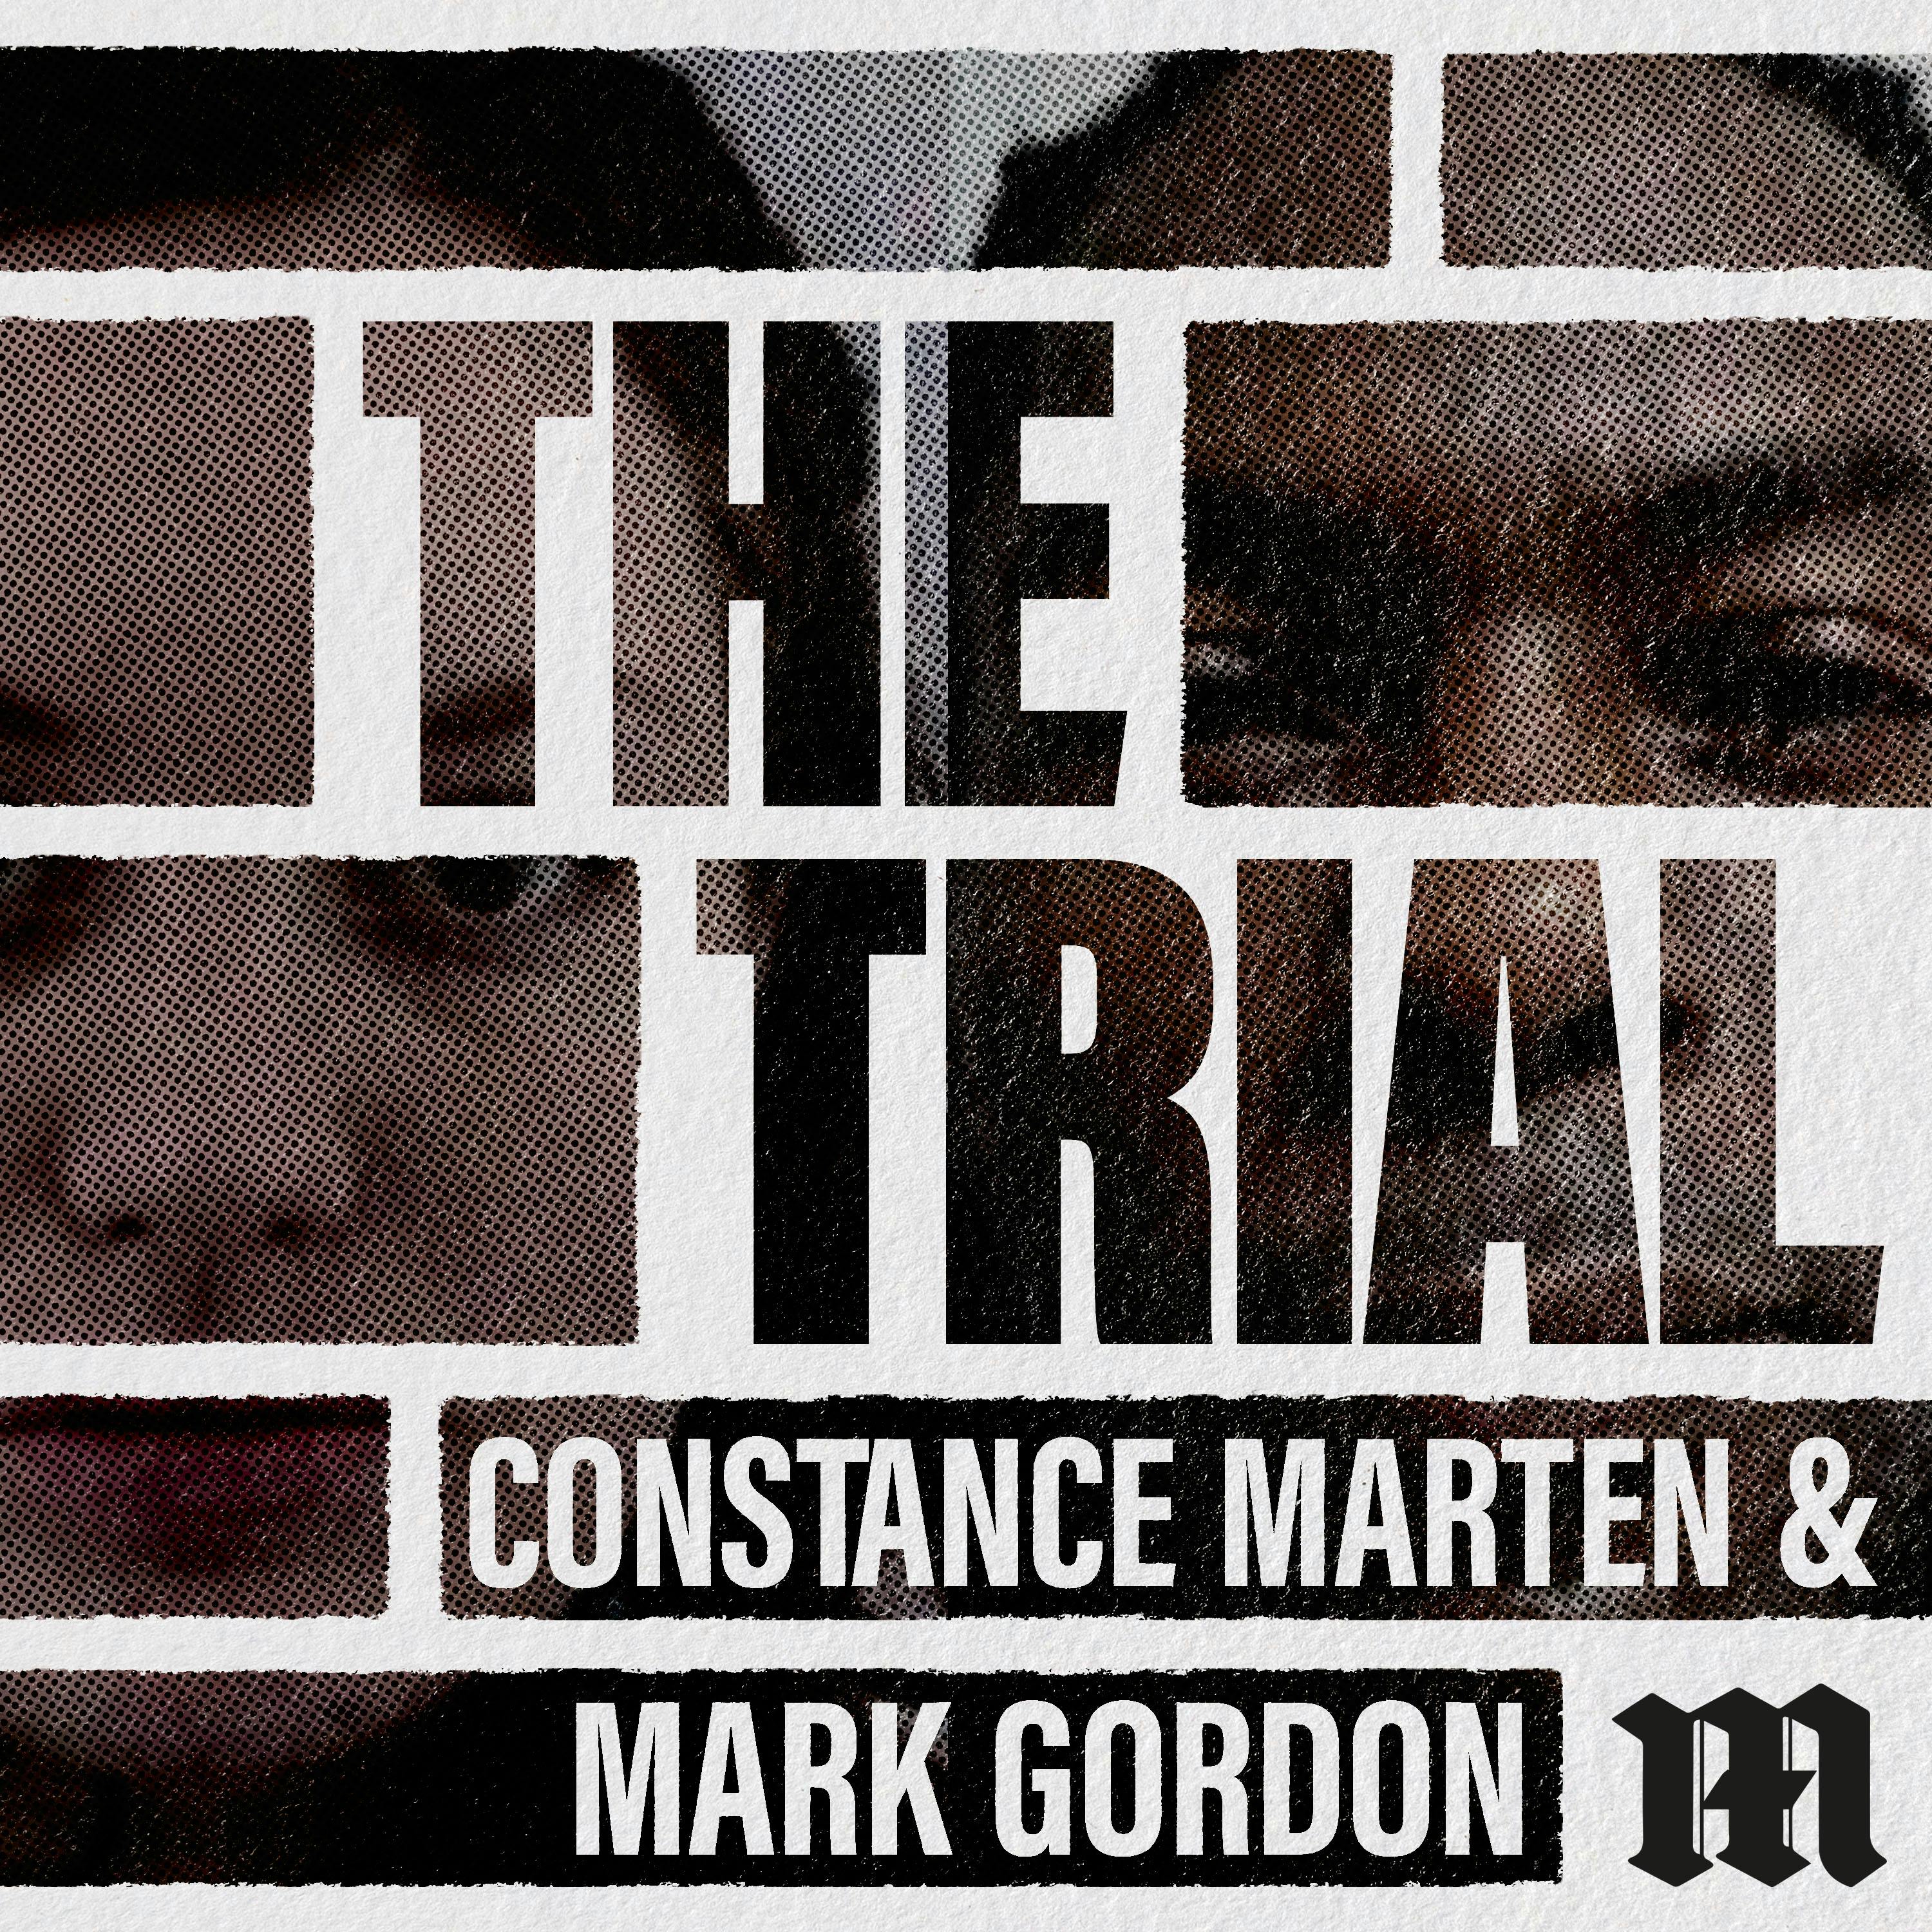 Constance Marten & Mark Gordon: The Judge